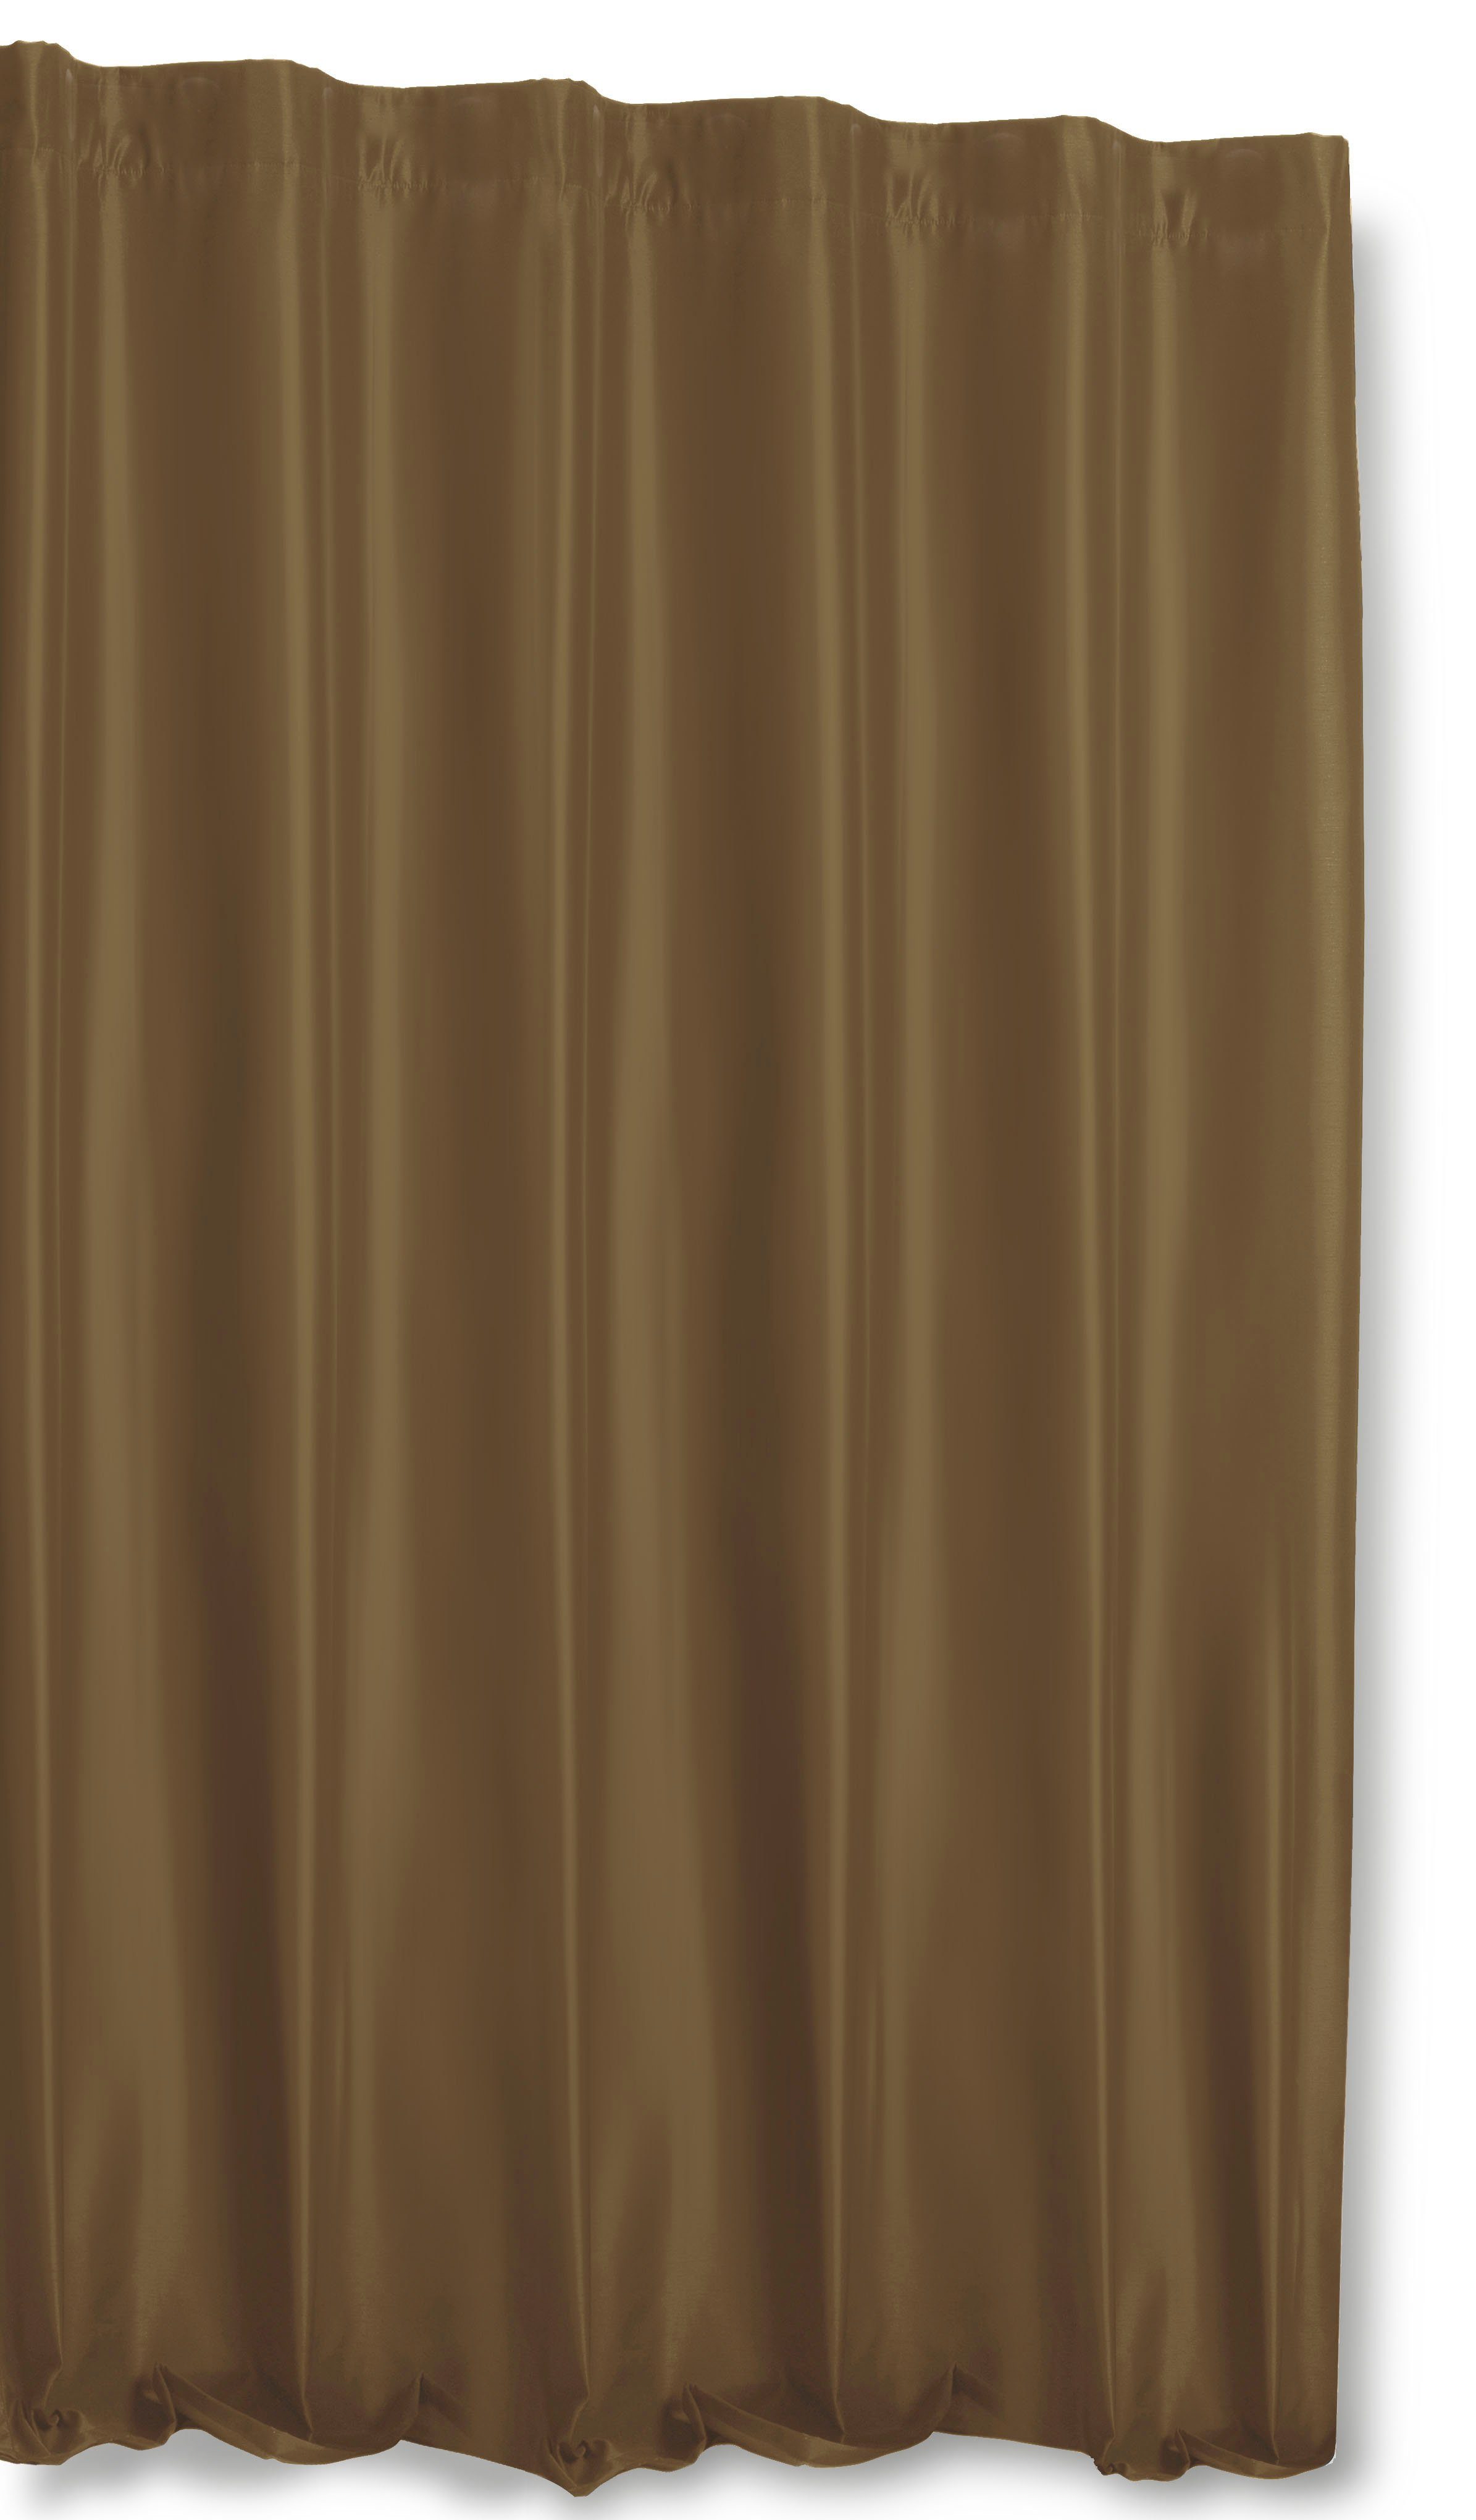 Deko, 245x245 Fleece extra Polyester blickdicht, breit Kräuselband Vorhang und Taupehell St), blickdicht cm Haus Türvorhang Polar Thermo (1 Wildseid,